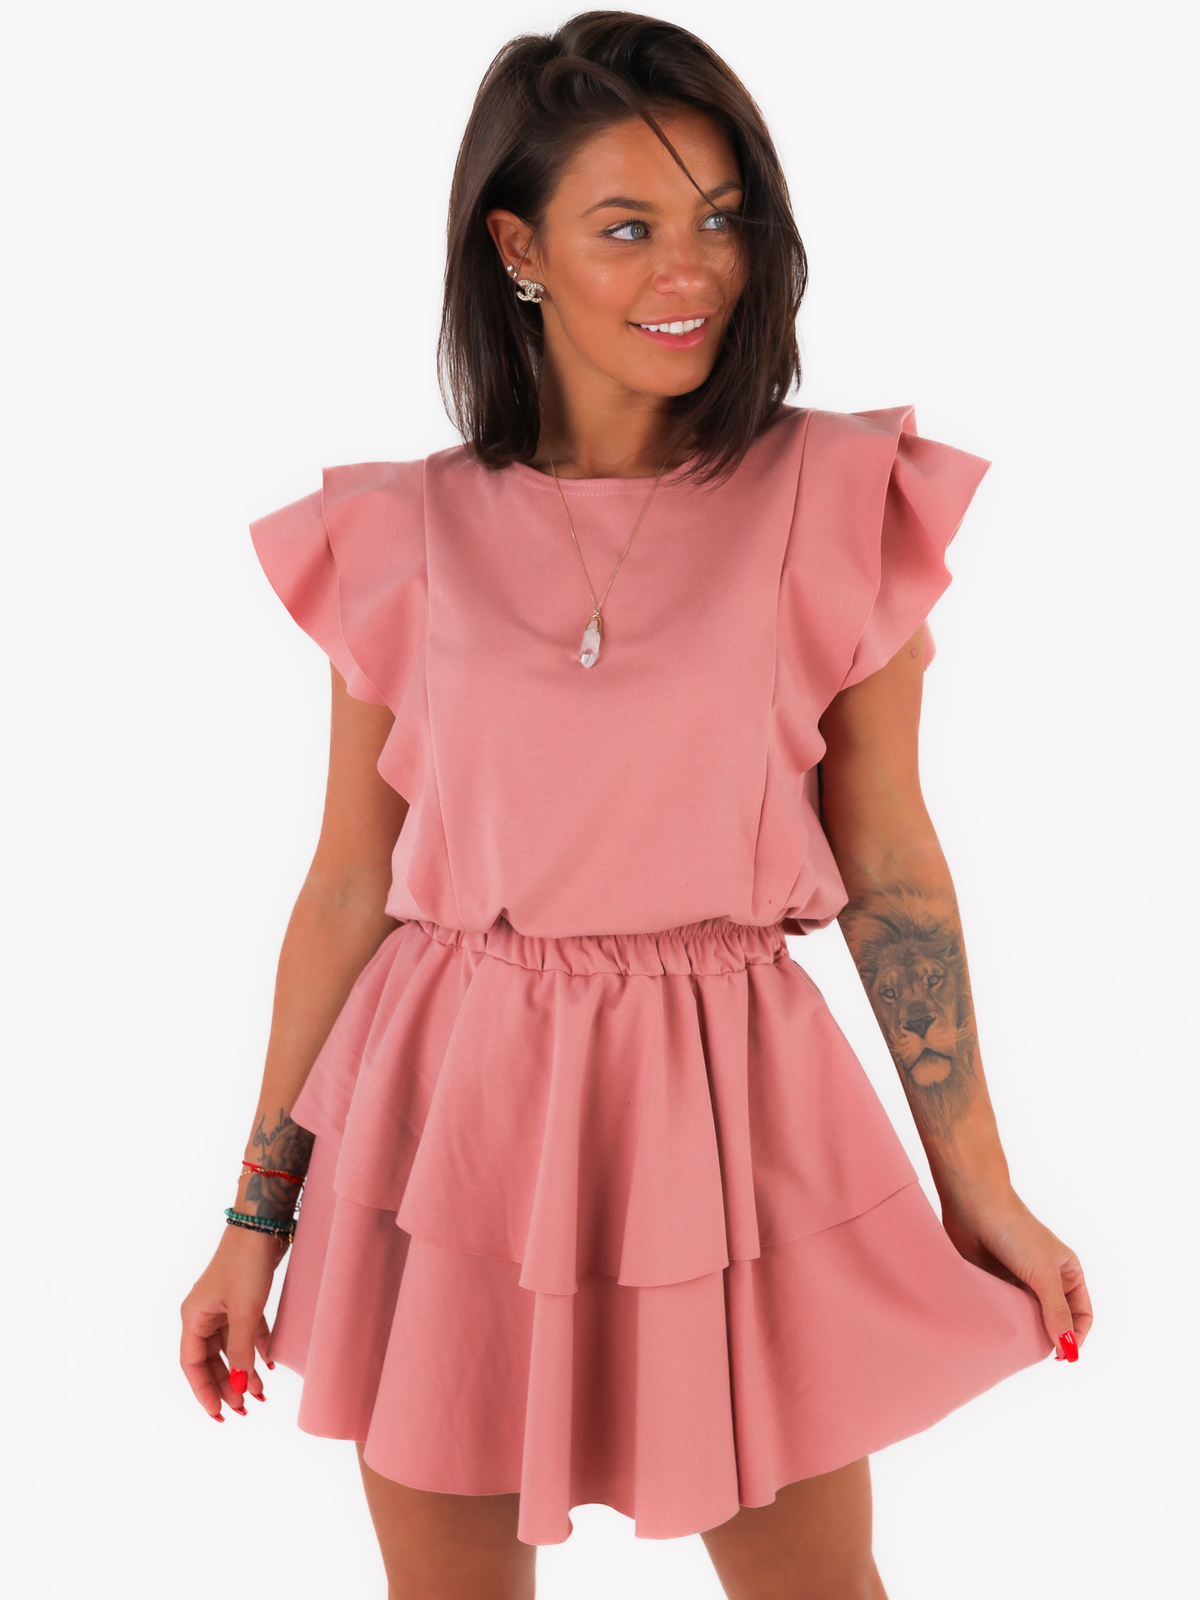 Asymmetrical dress with frills, dirty pink c223 k01